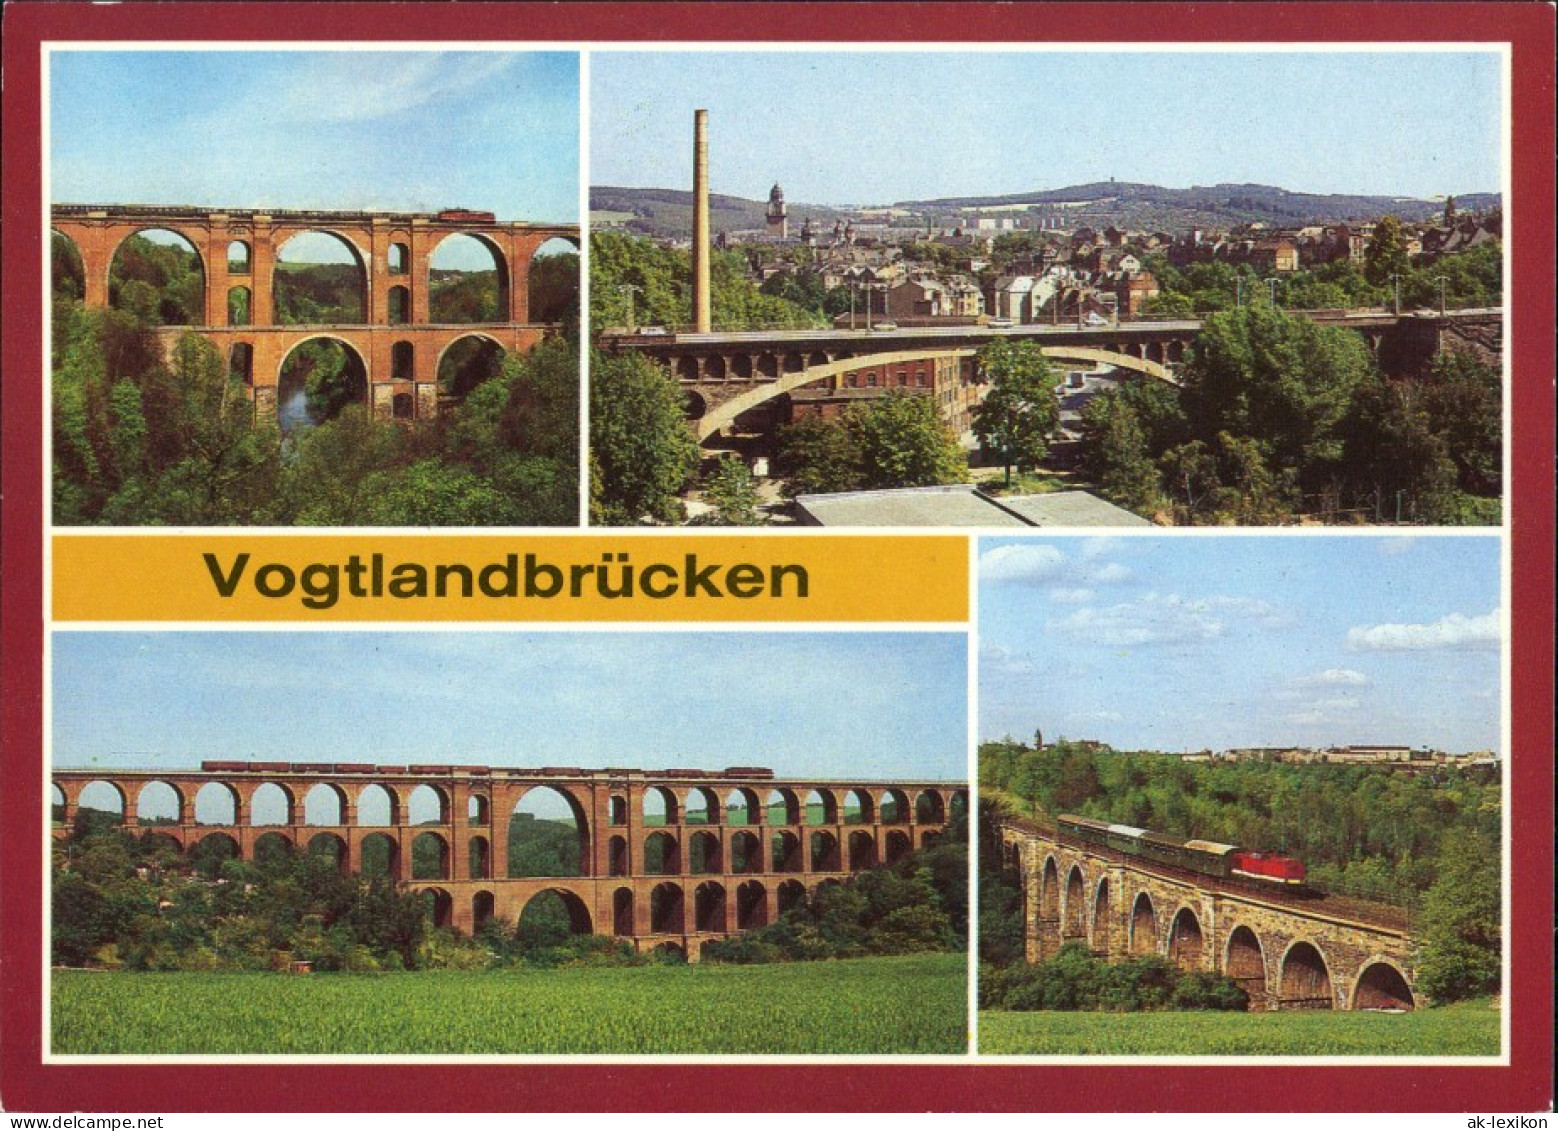 Plauen (Vogtland) Elstertalbrücke, Friedensbrücke  Syratalbrücke 1985 - Mylau